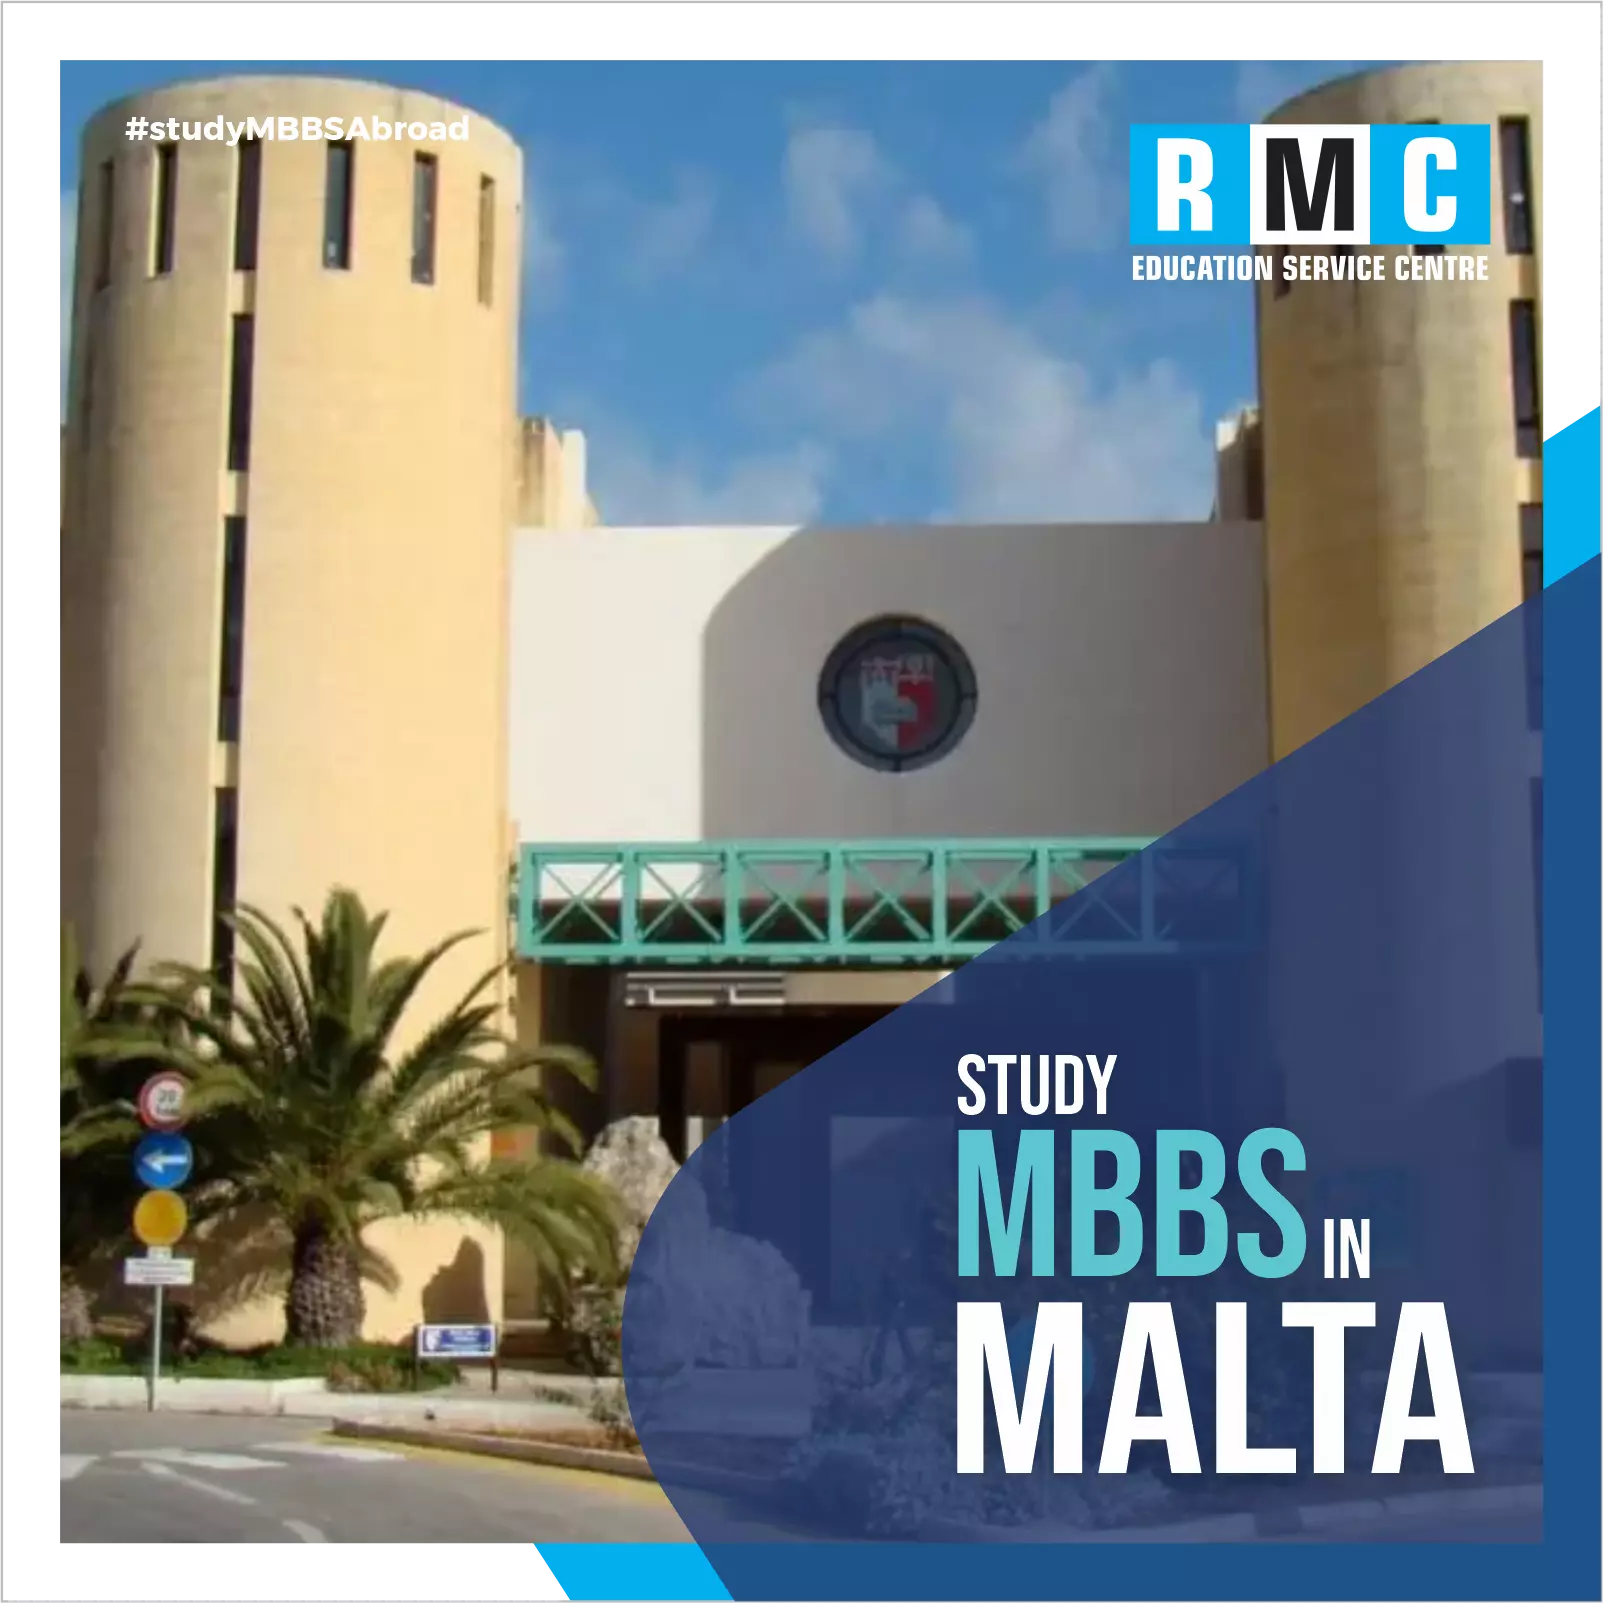 MBBS in Malta